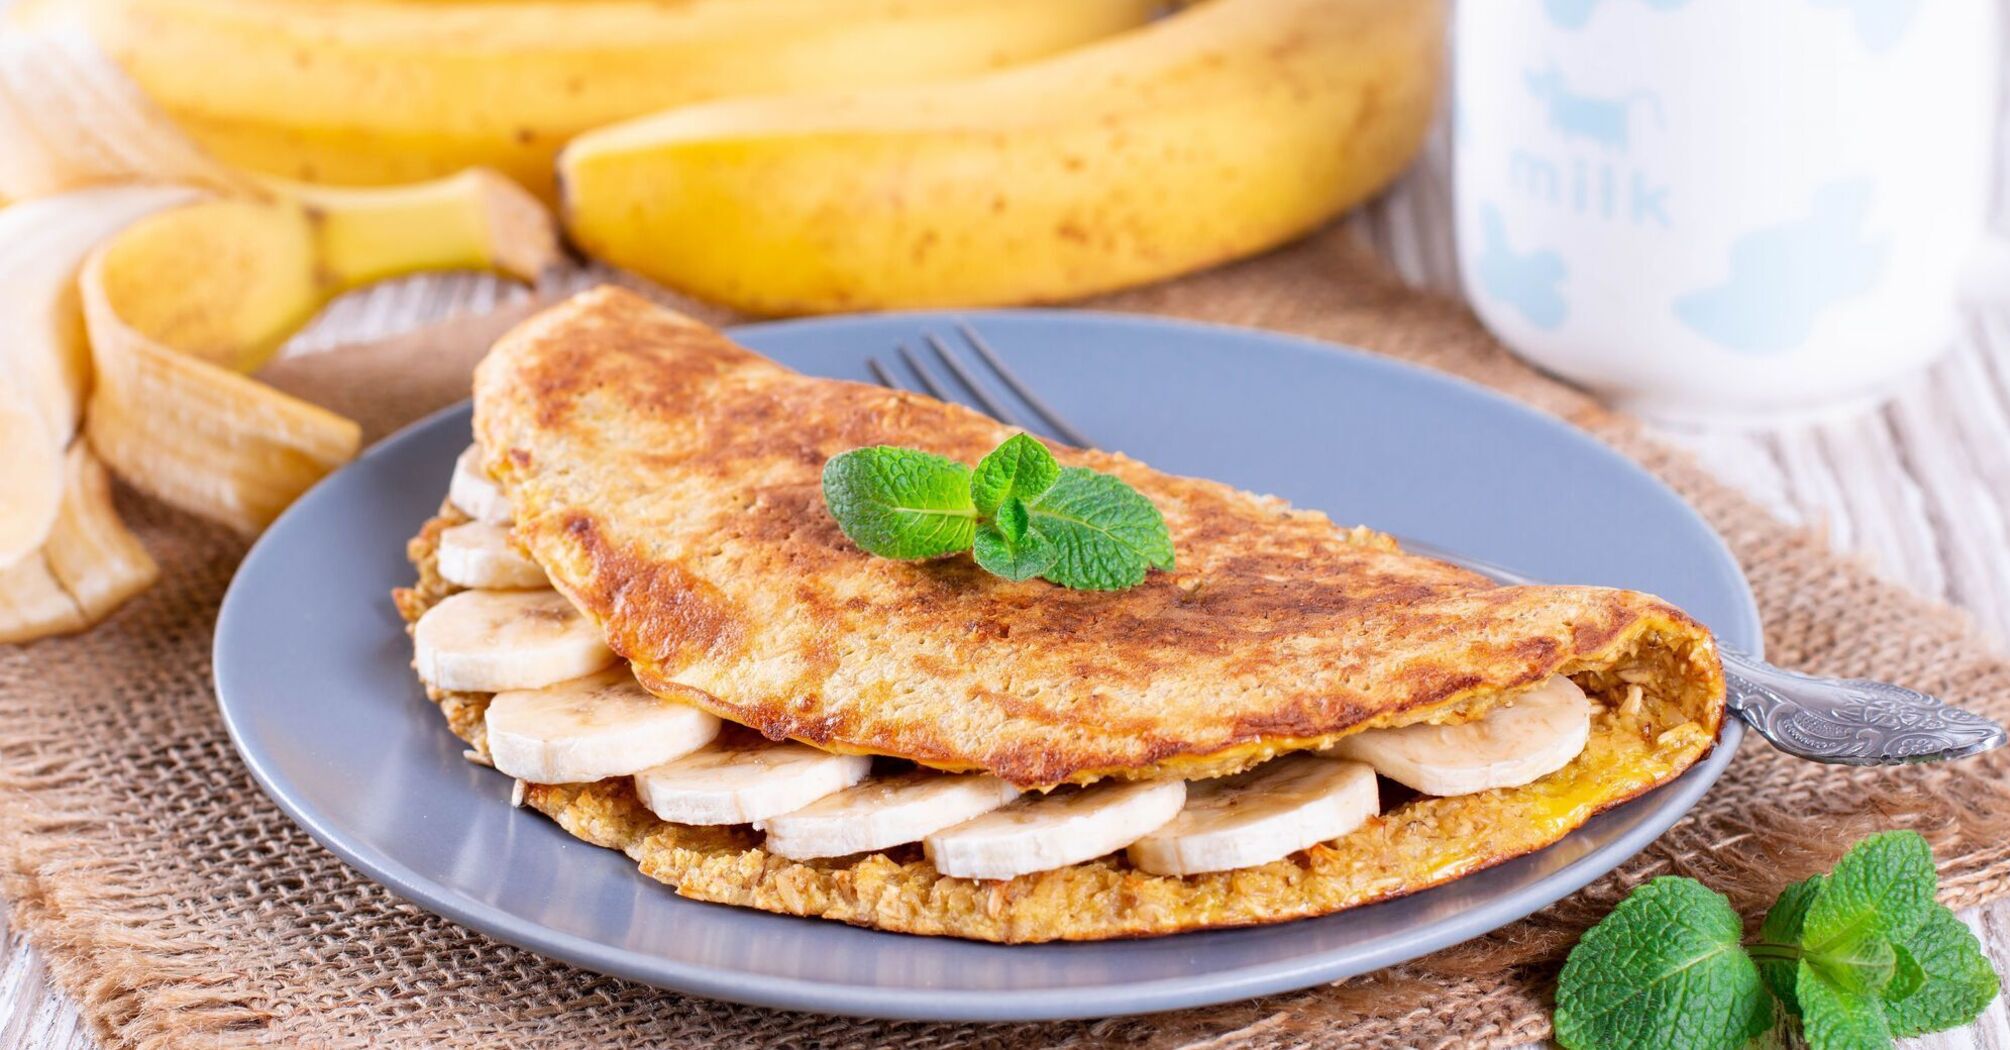 Oatmeal pancake with banana